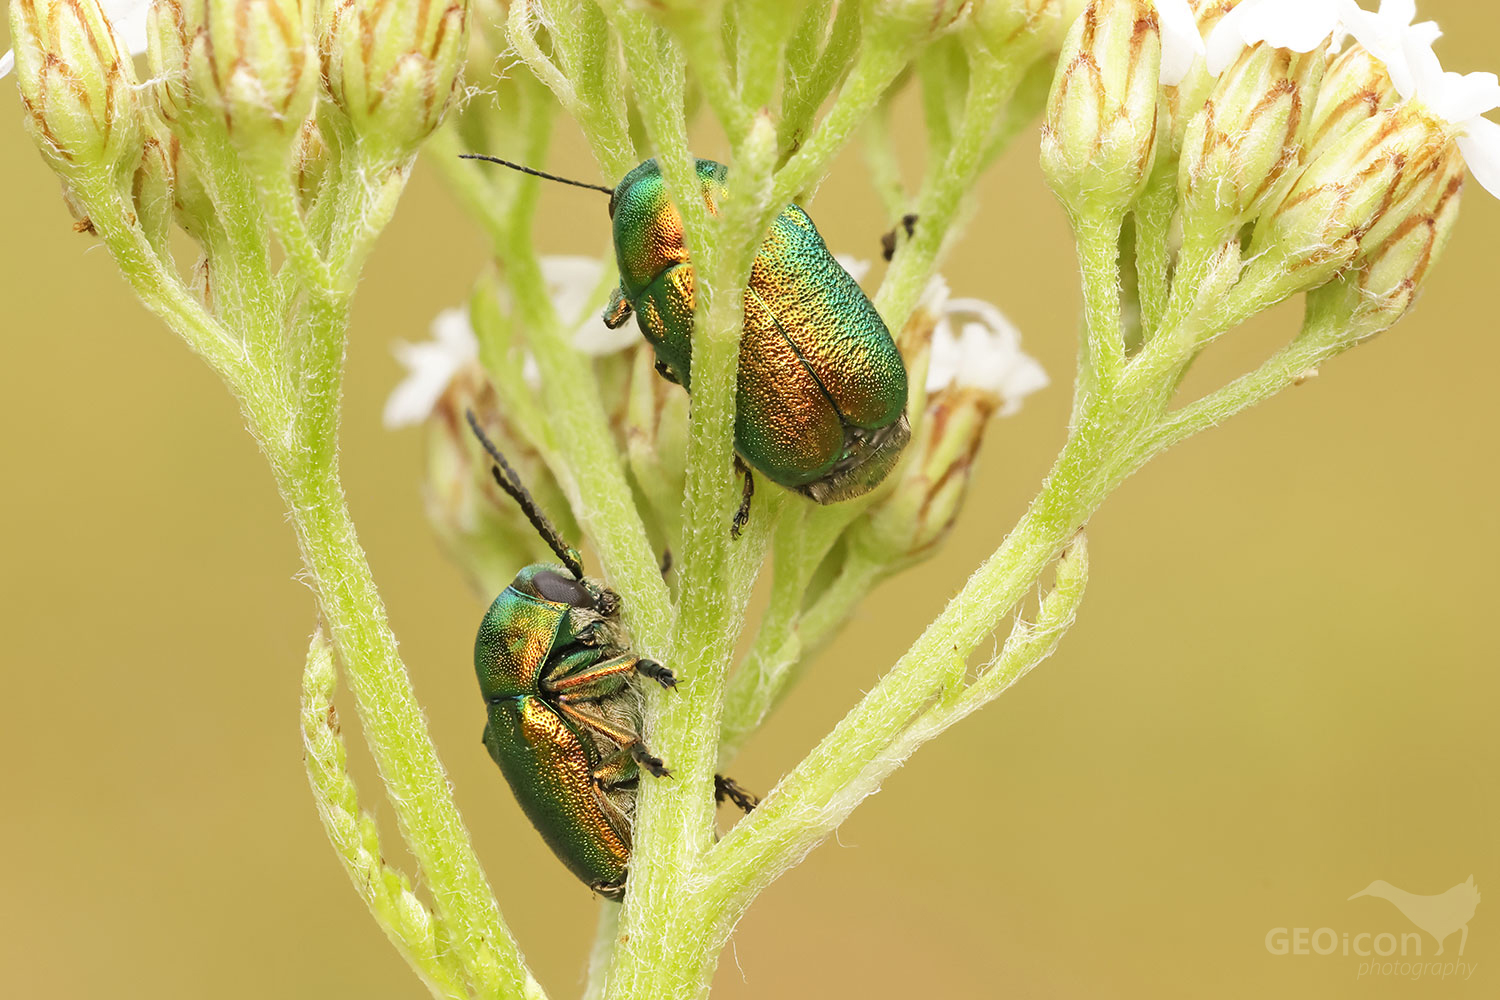 Metallic-colored beetle Cryptocephalus androgyne